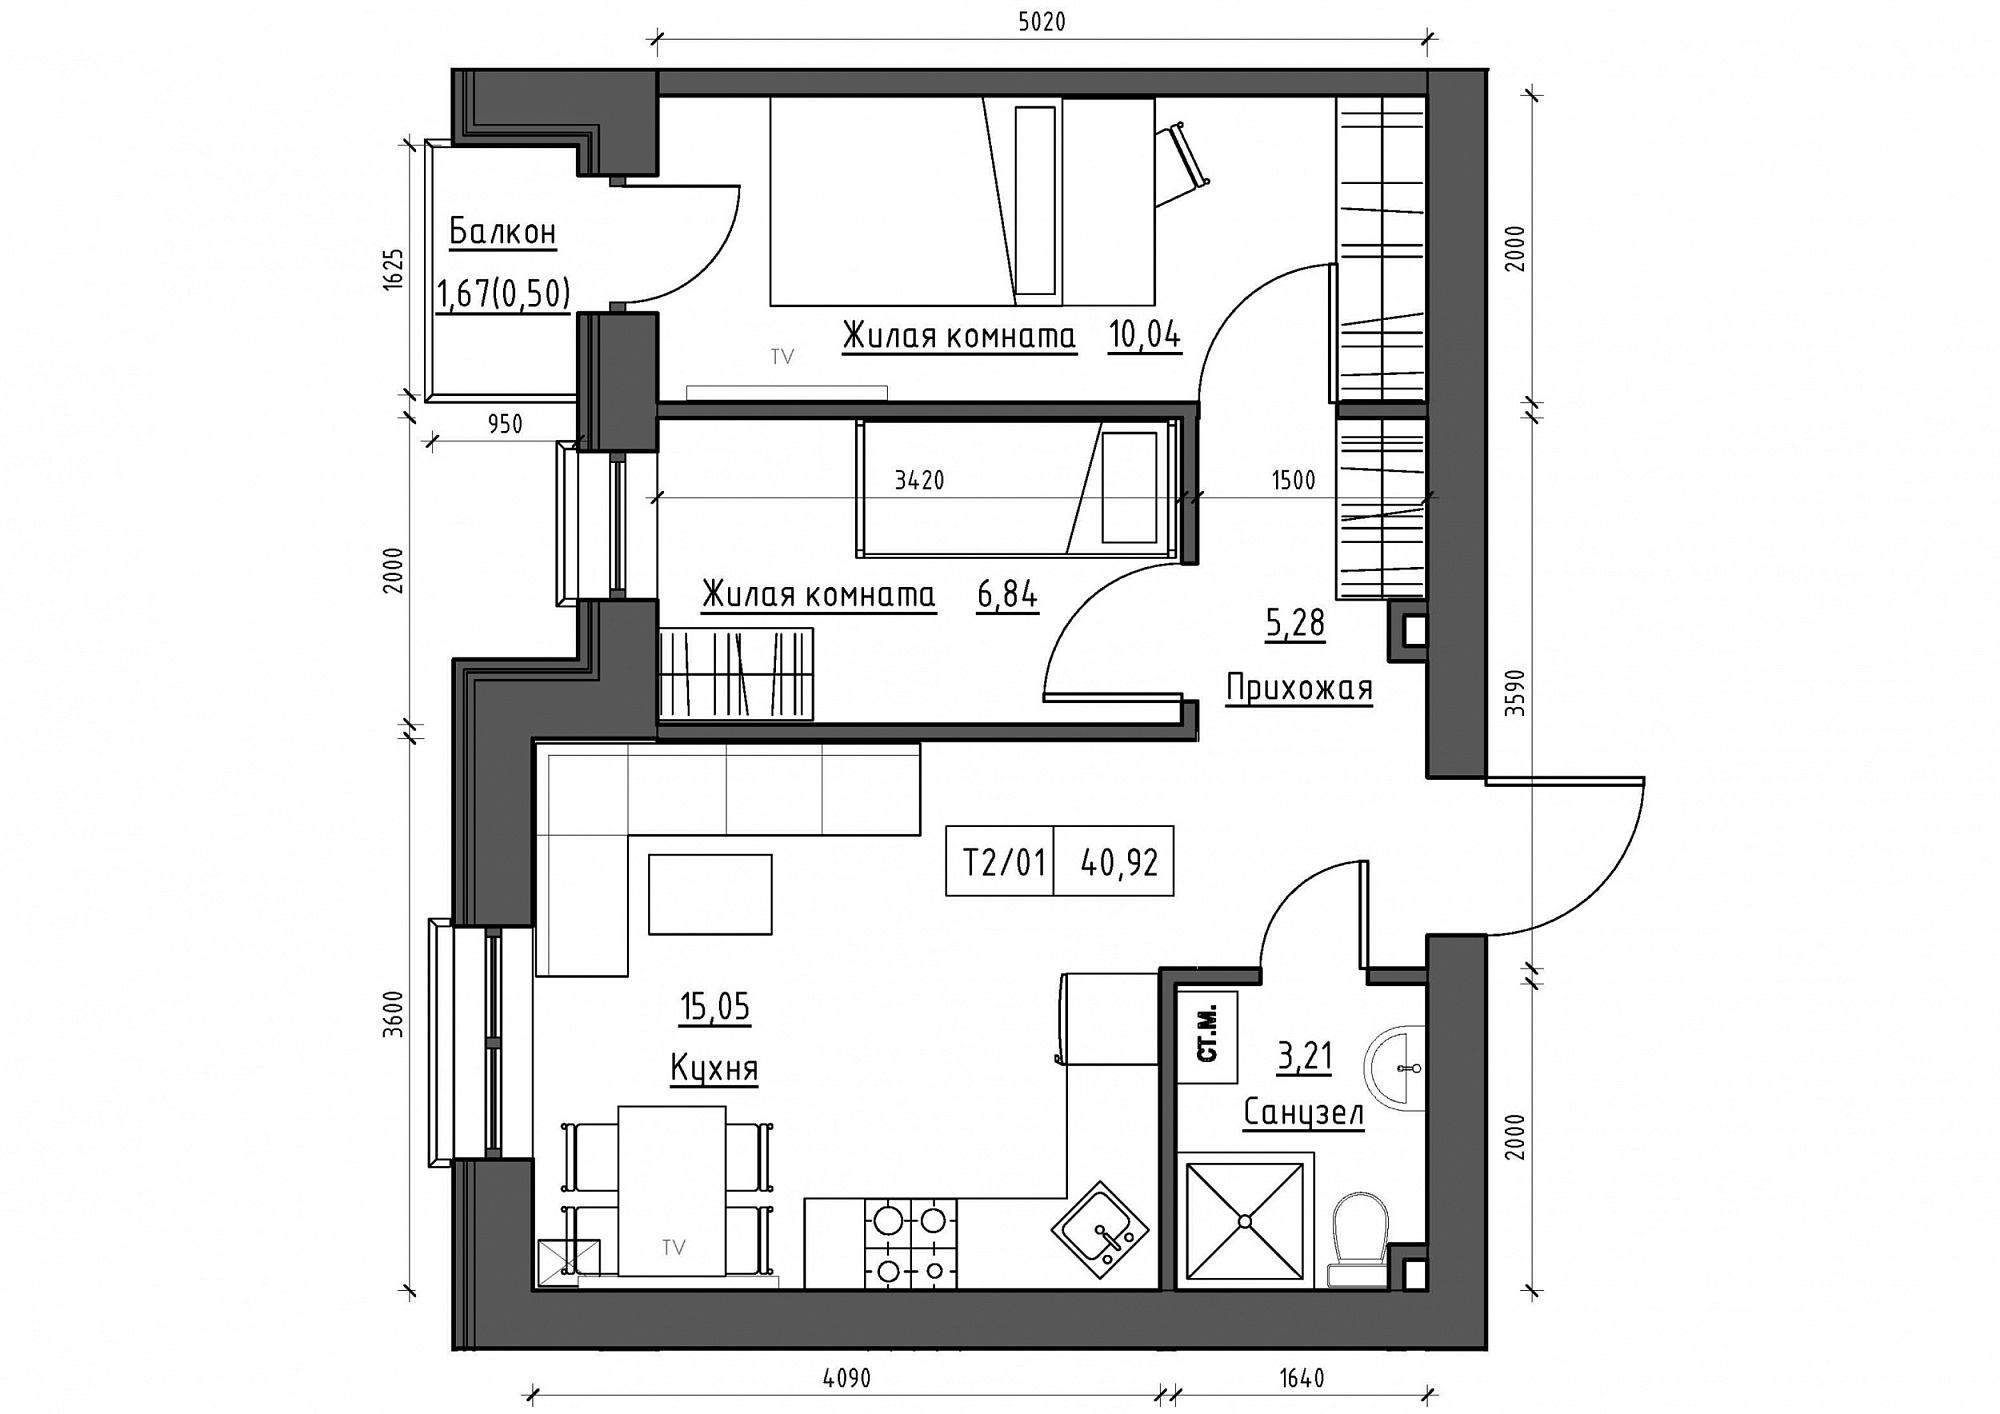 Planning 2-rm flats area 40.92m2, KS-012-03/0010.